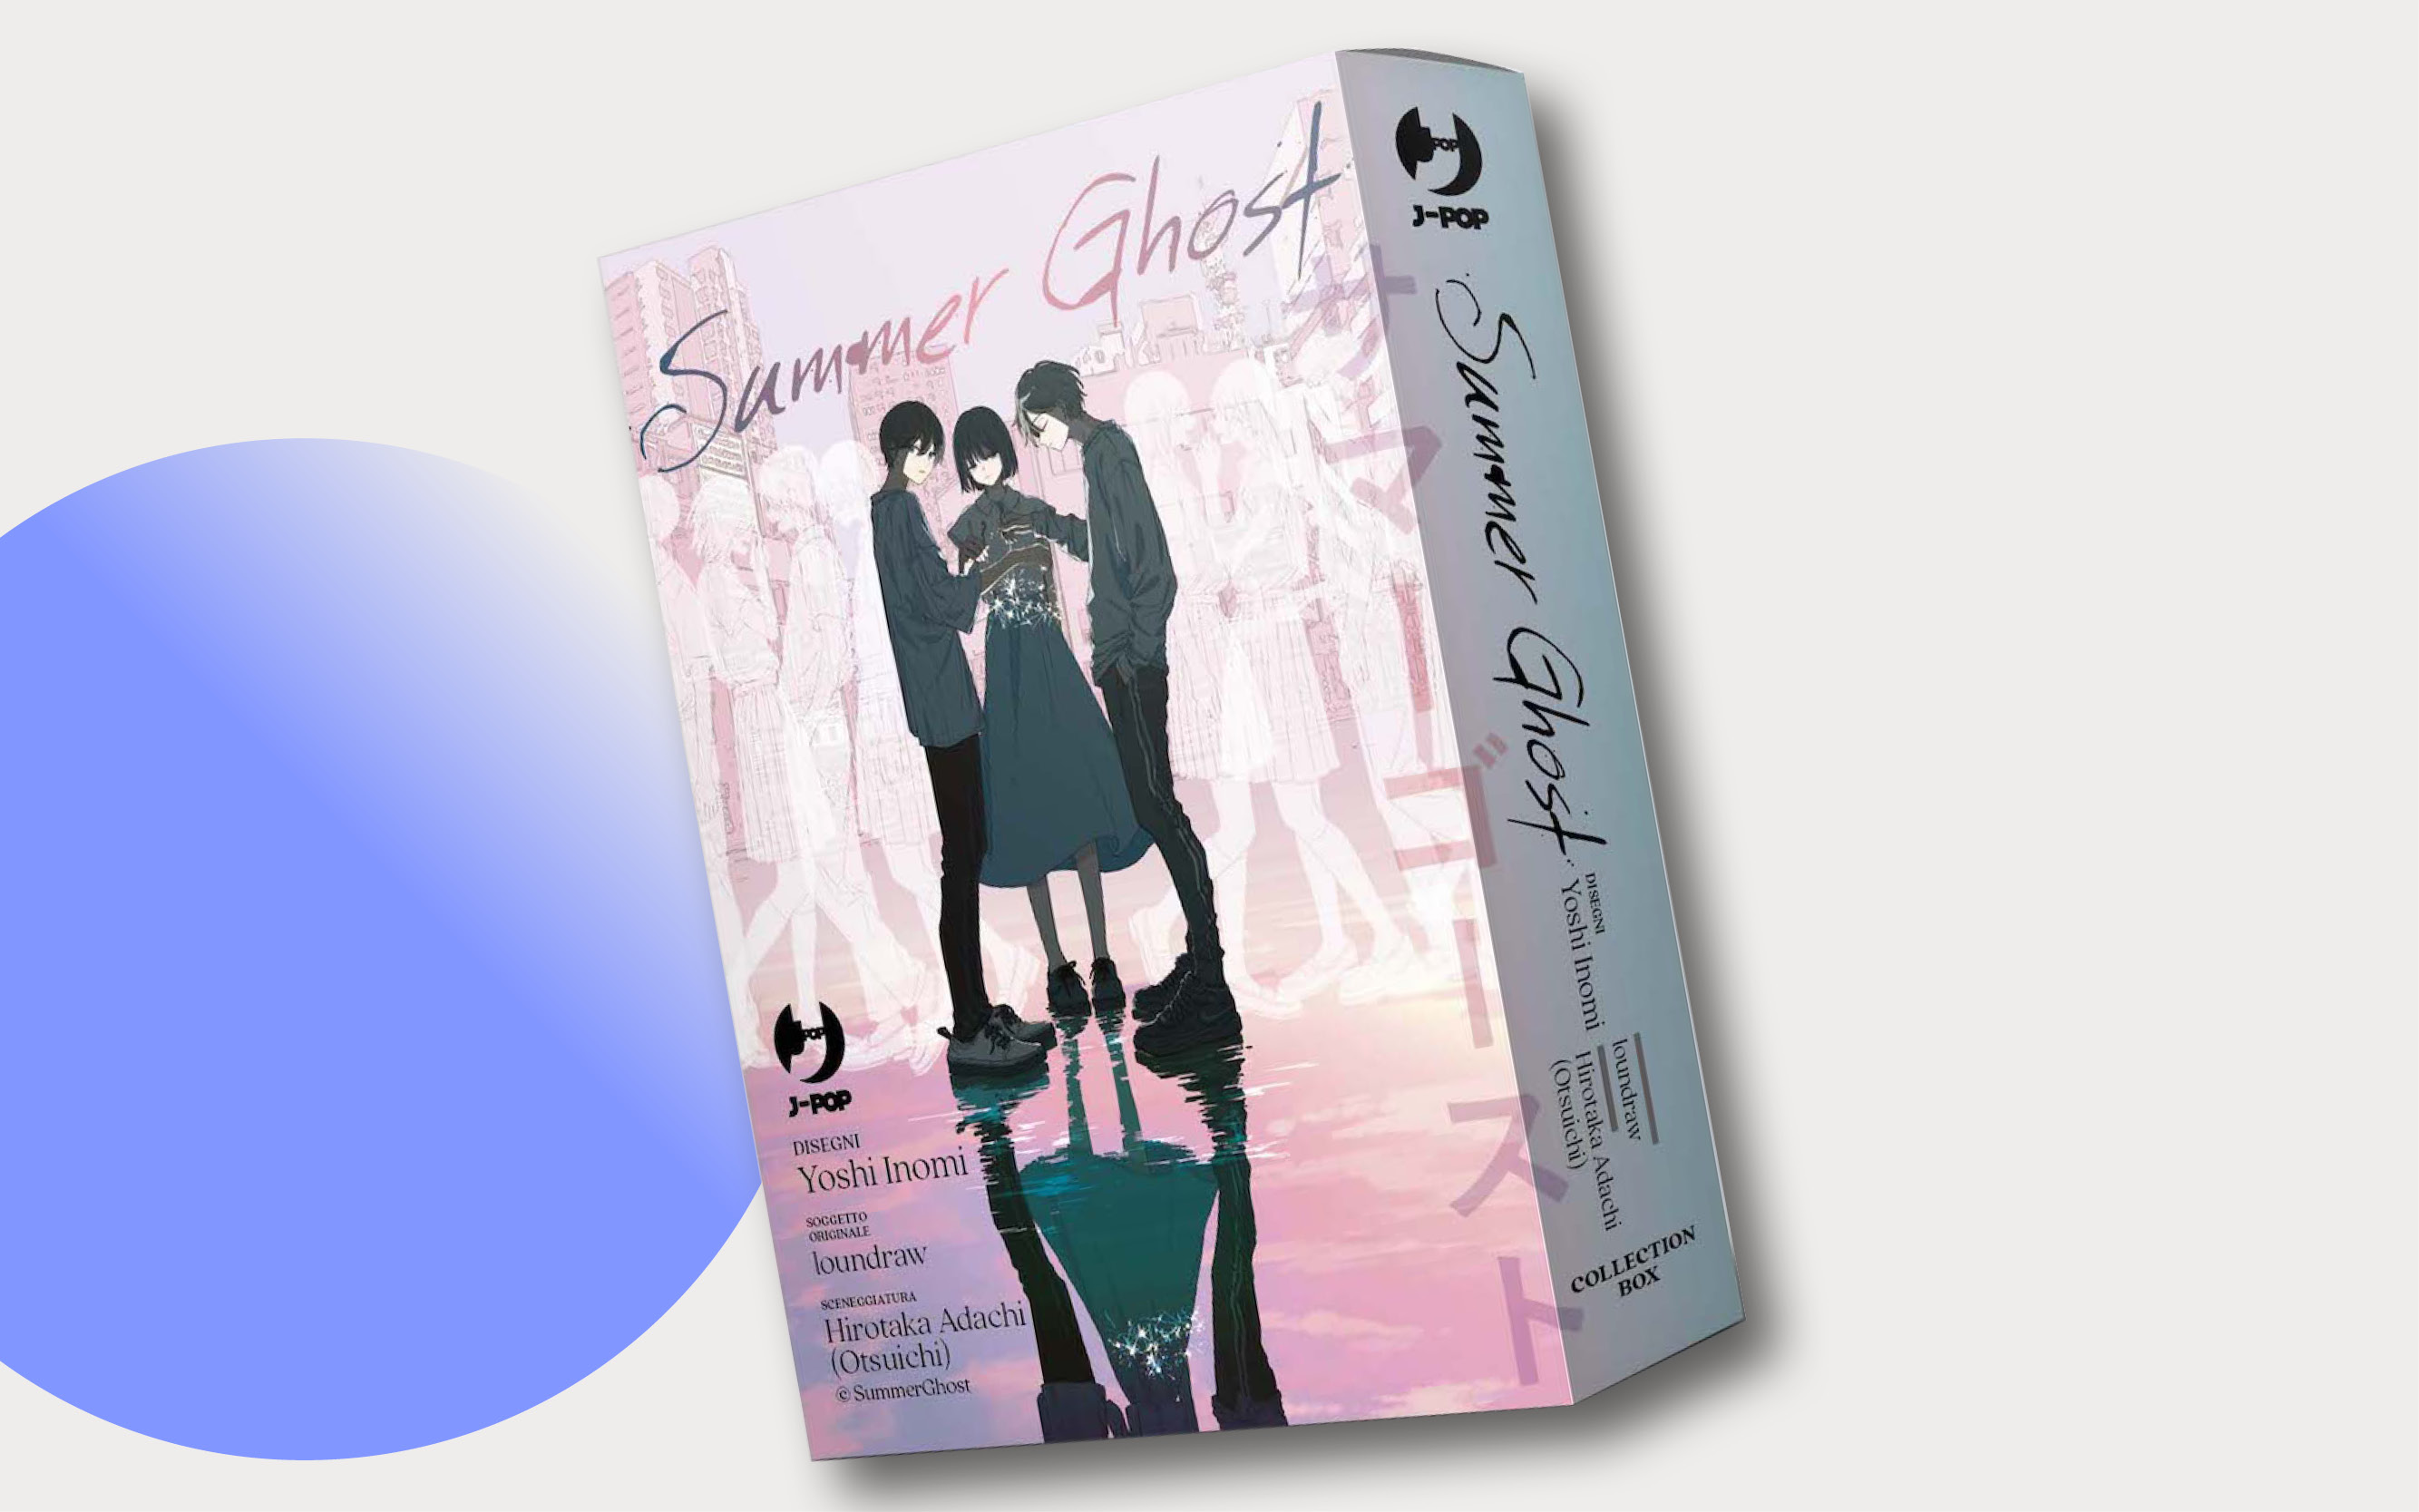 J-POP Manga presenta Summer Ghost  di Yoshi Inomi, loundraw, Hirotaka Adachi (Otsuichi)